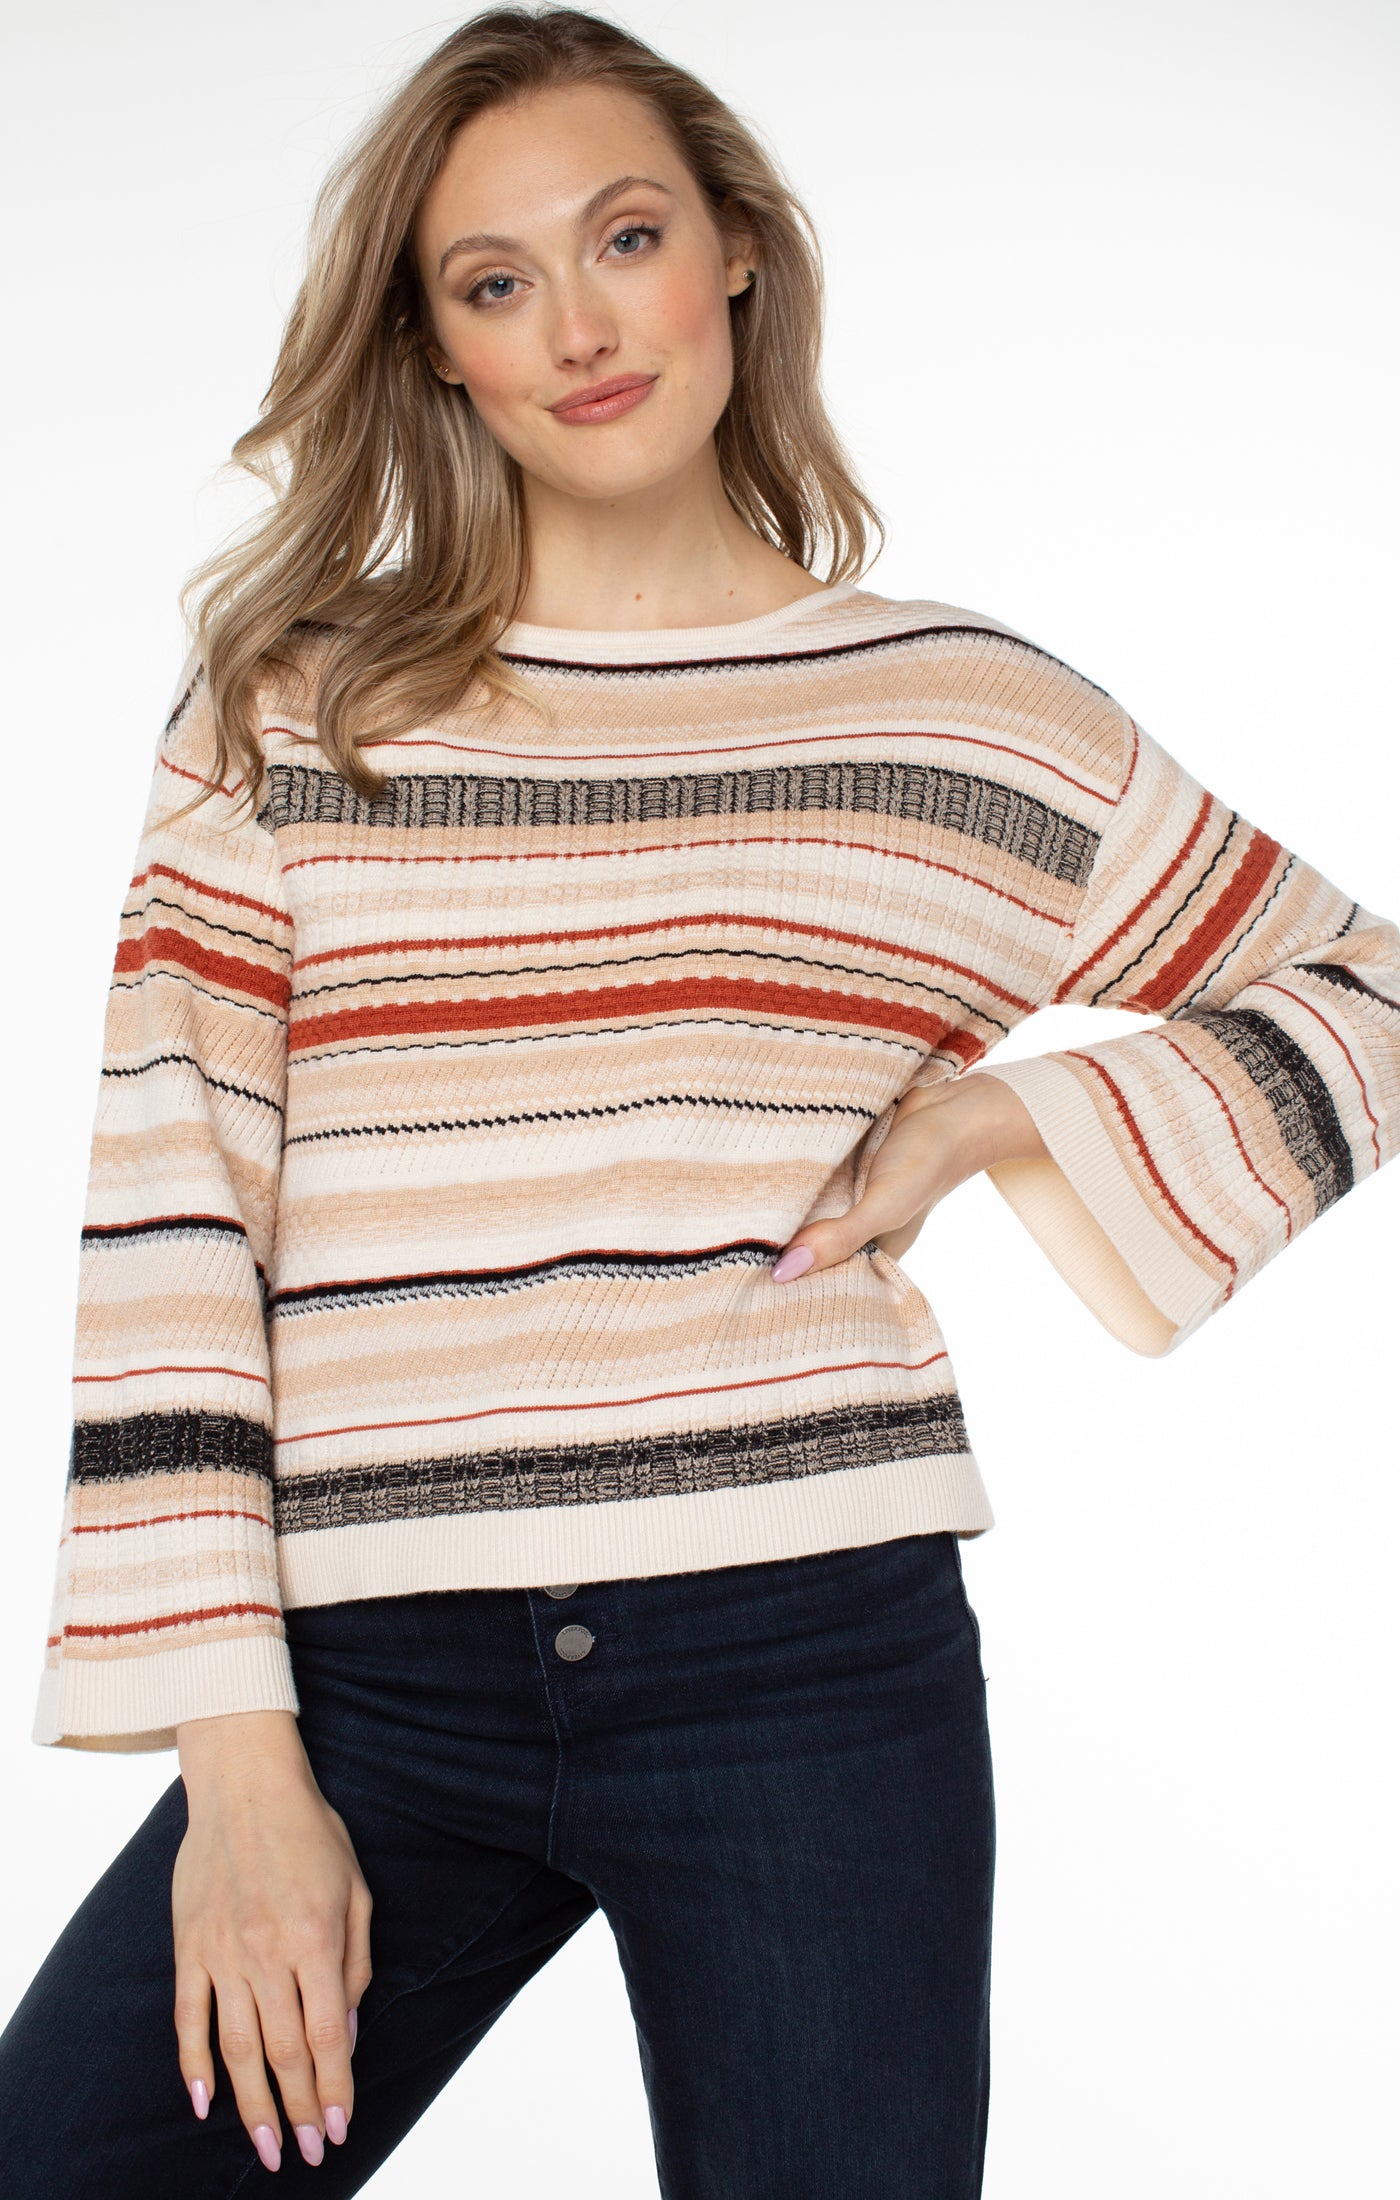 LPLA Boatneck Striped Sweater